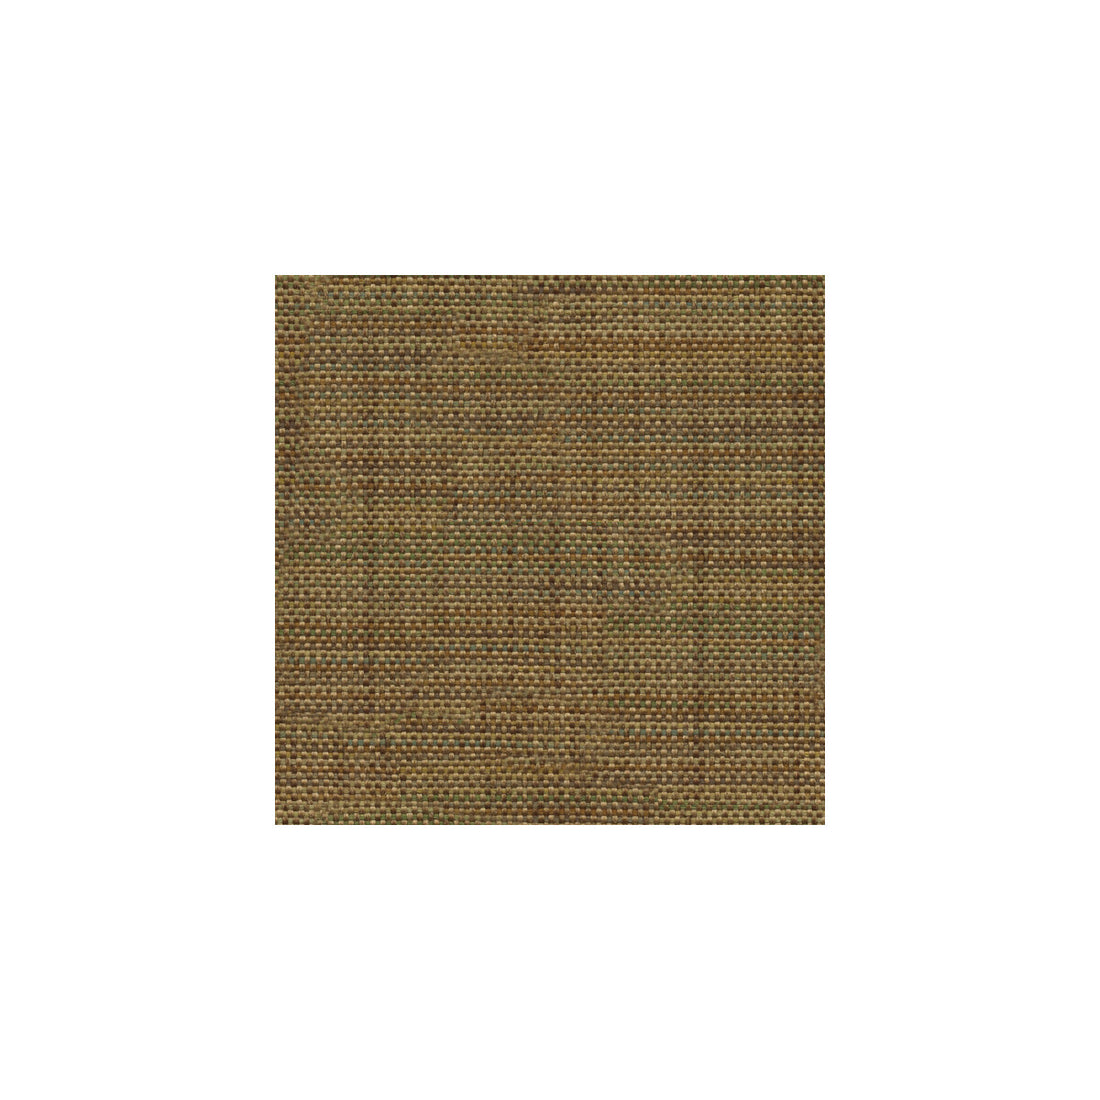 Kf Smt fabric - pattern 31754.315.0 - by Kravet Smart